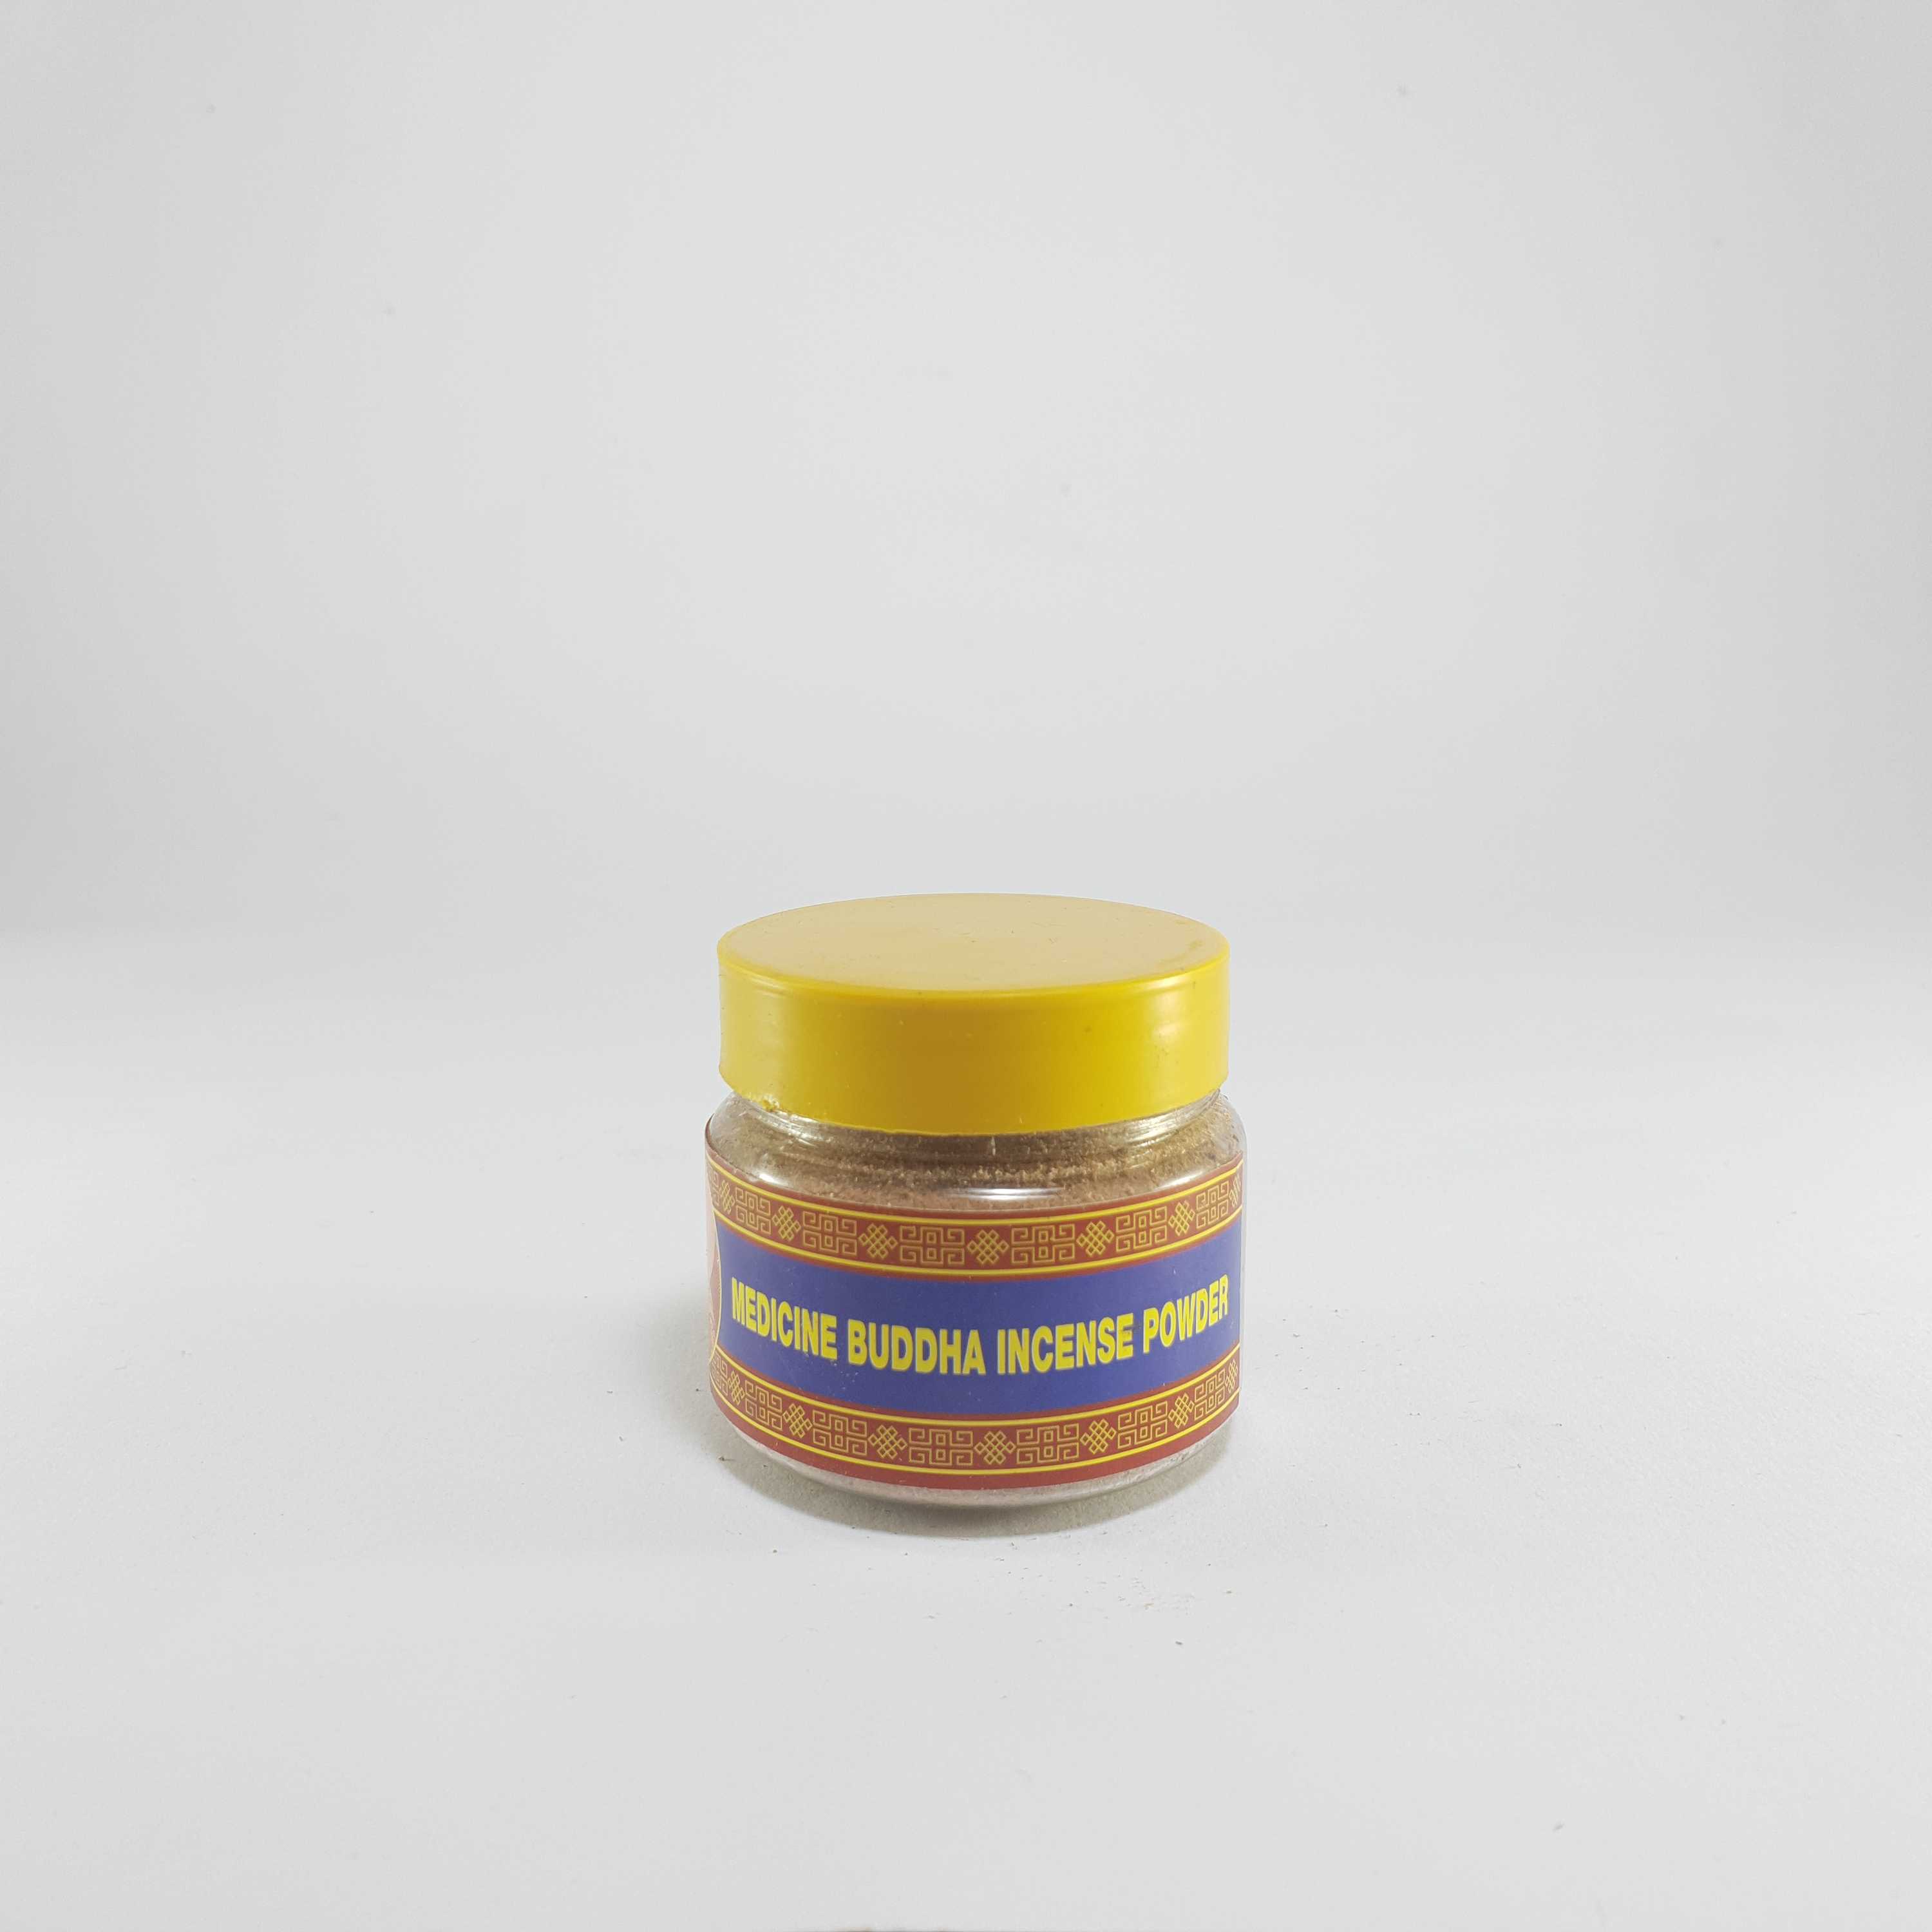 Medicine Buddha Incense Powder, in Pet Jar